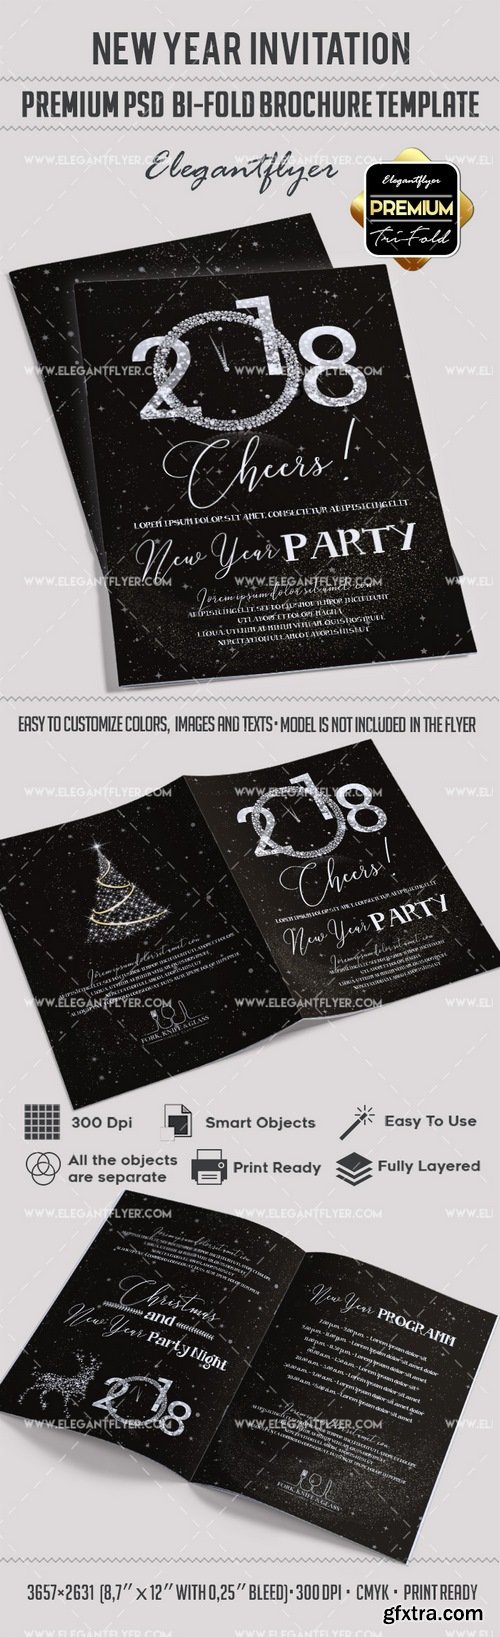 New Year Party Invitation – Premium Bi-Fold PSD Brochure Template